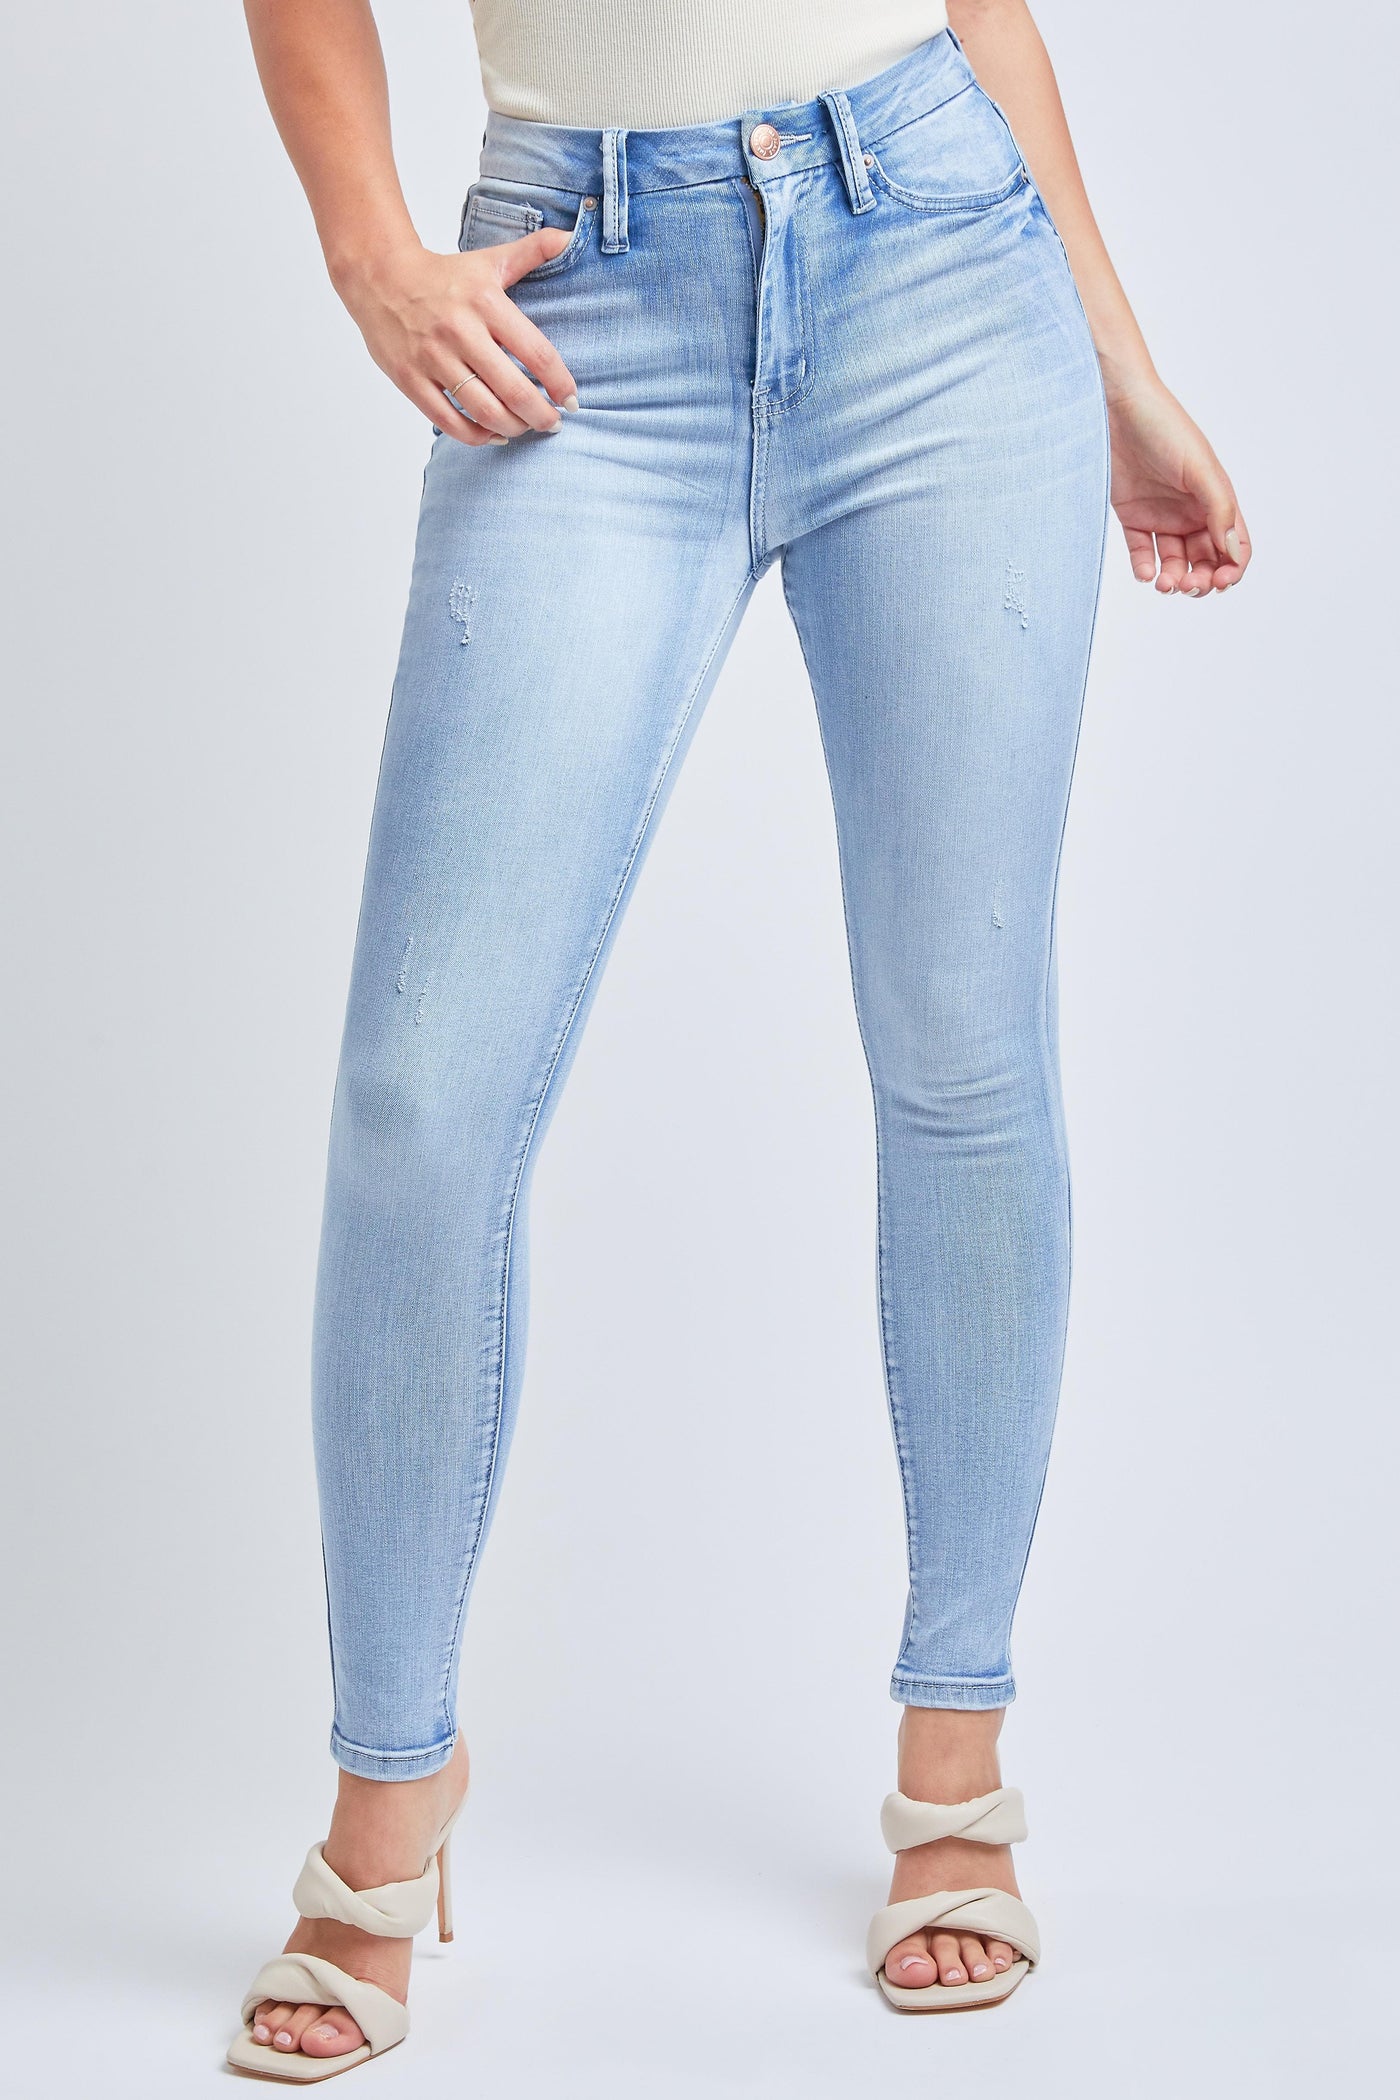 – Jeans-sale Skinny JEANS from Fit Curvy YMI YMI Women\'s